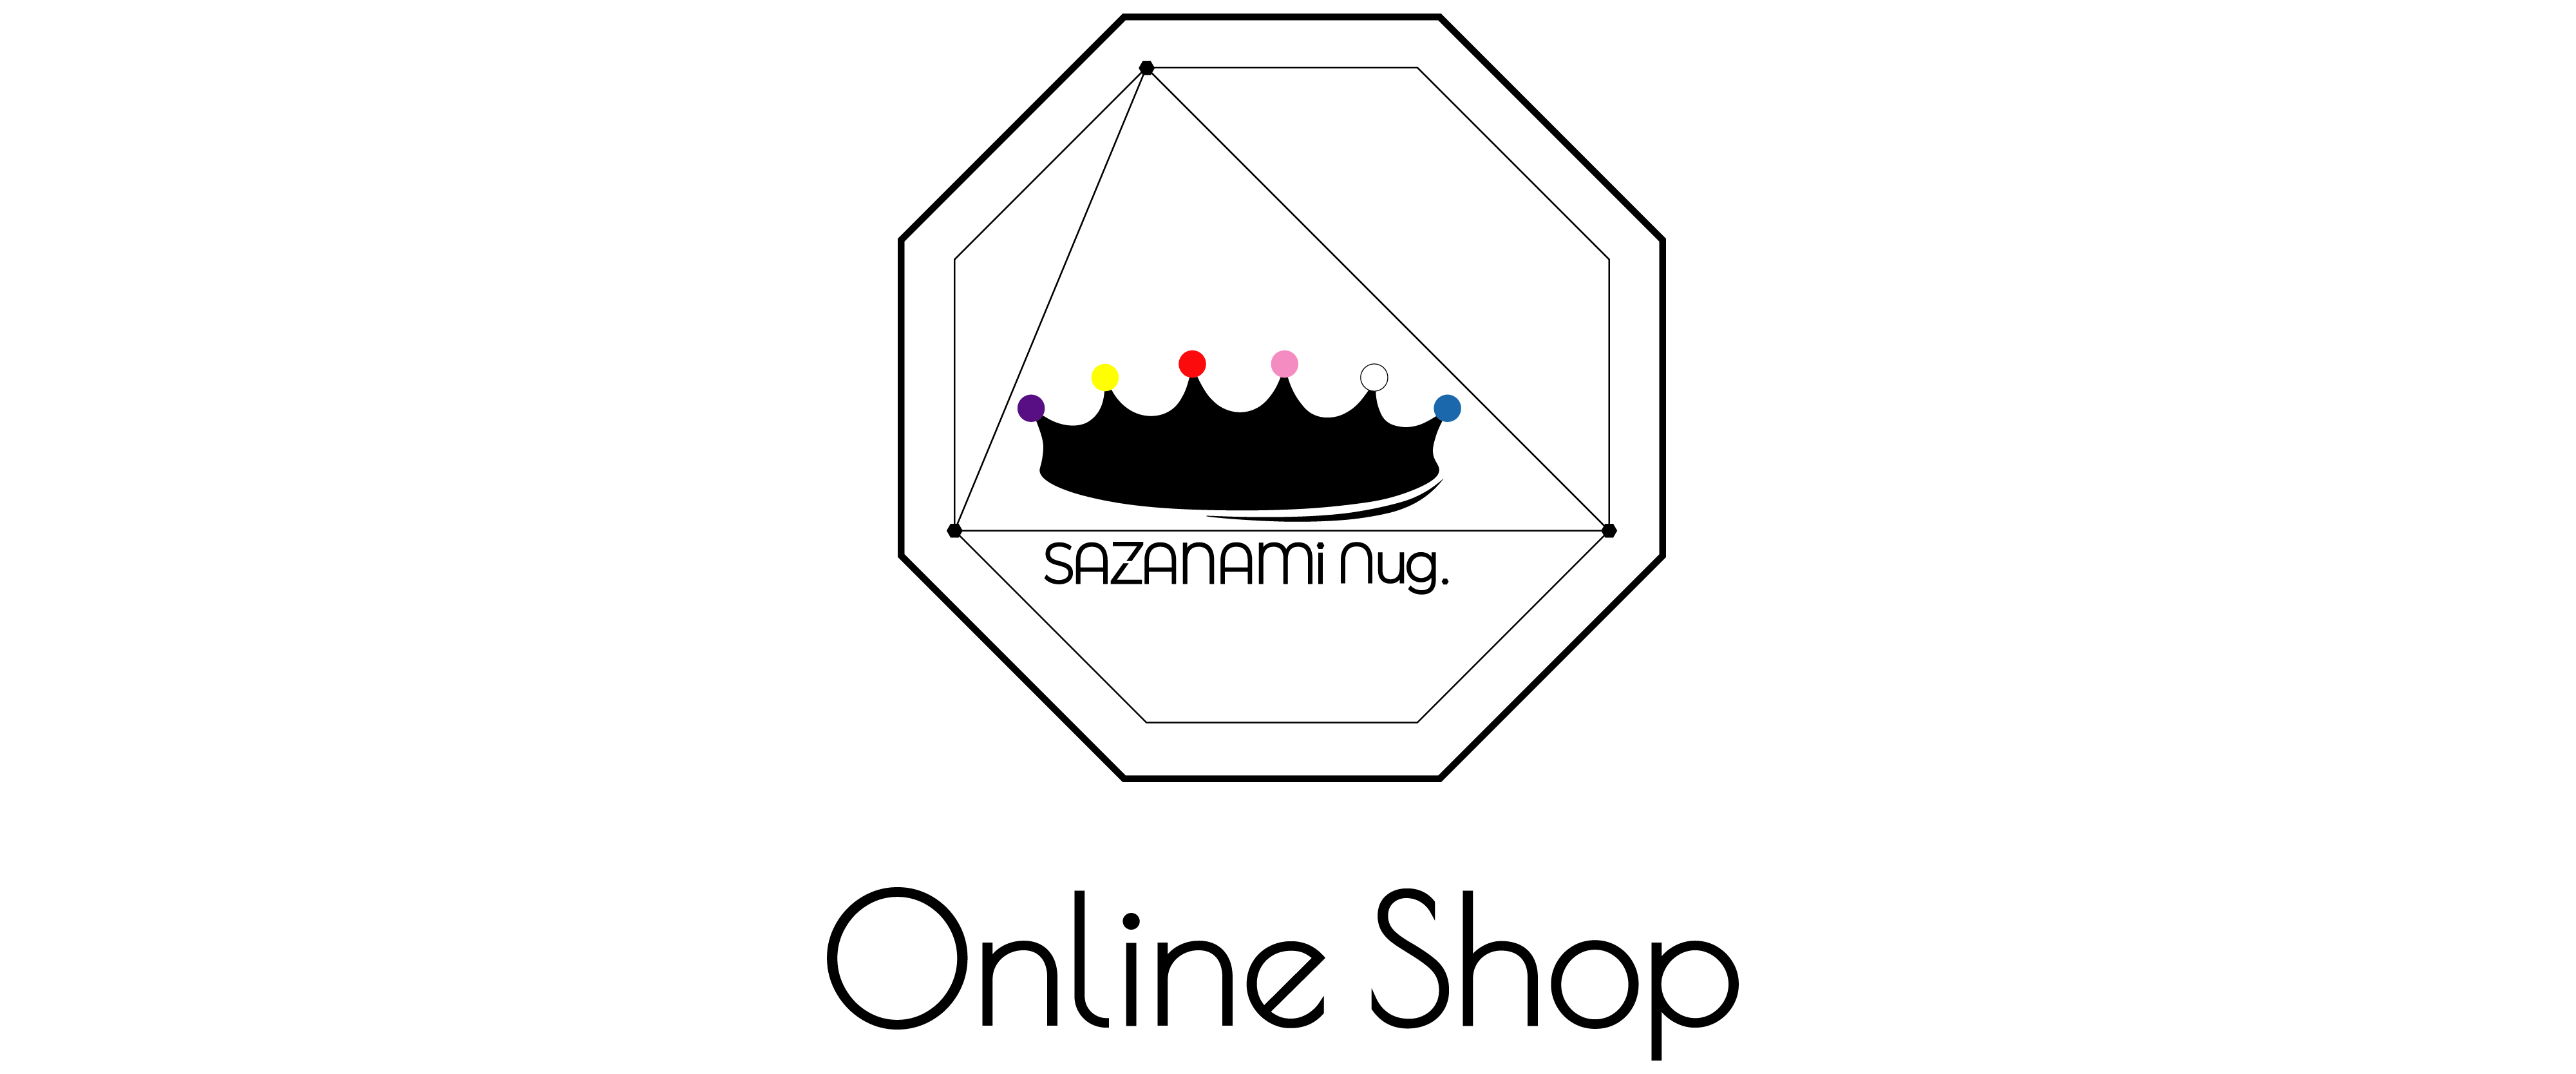 SAZANAMi Λug. Online Shop